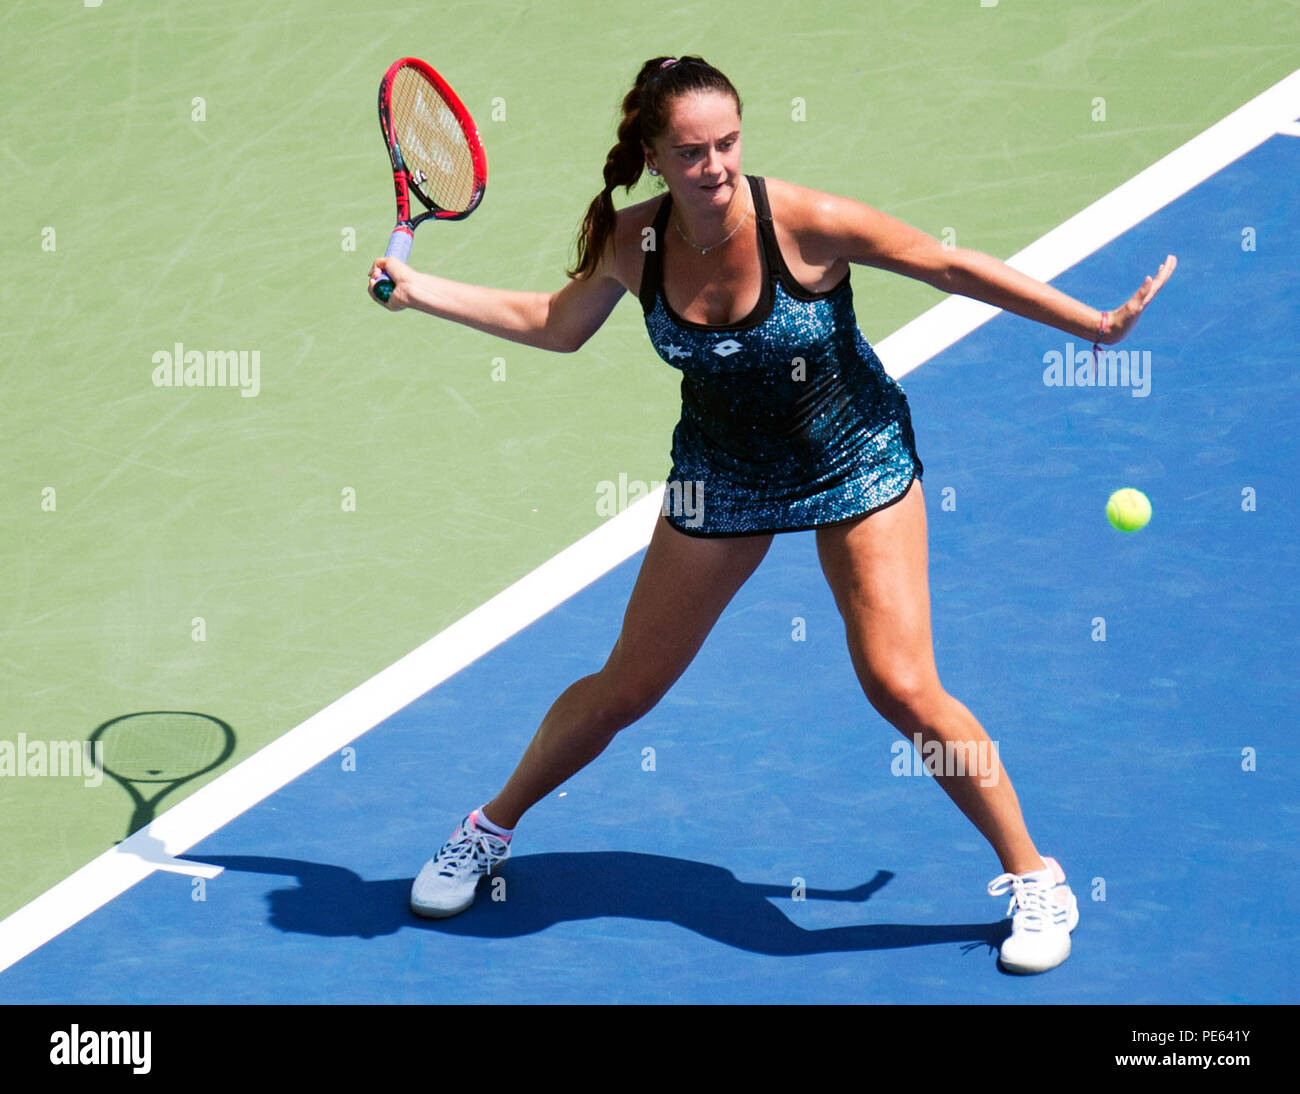 Ohio, USA. August 12, 2018: Viktoria Kuzmova (SVK) hits the ball back to Camila Giorgi (ITA) at the Western Southern Open in Mason, Ohio, USA. Brent Clark/Alamy Live News Stock Photo